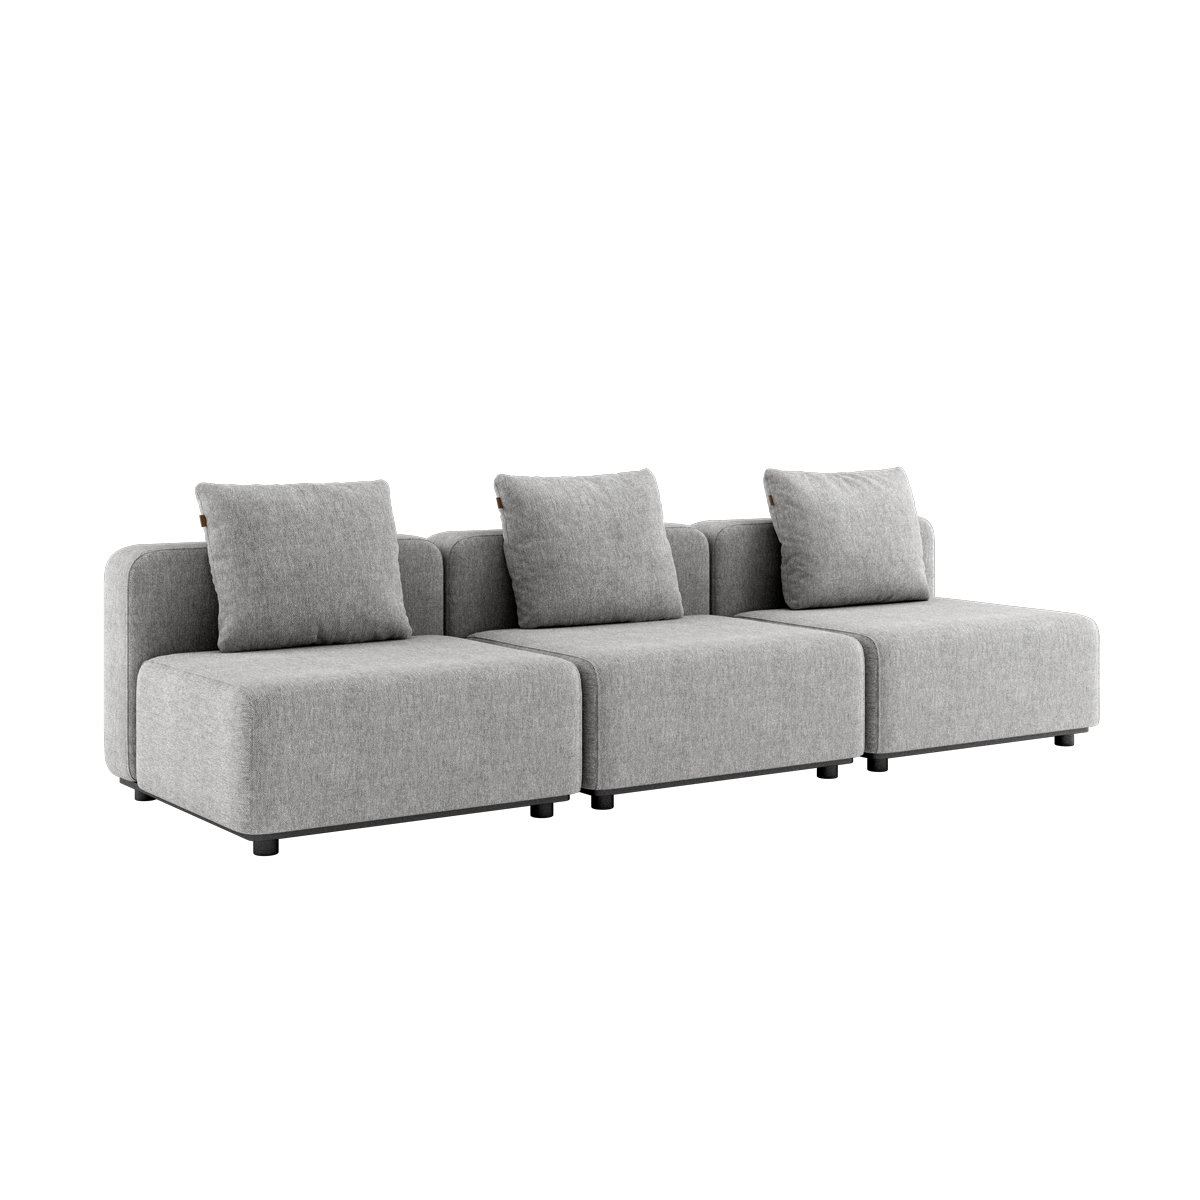 variant_41660786016429% | Modulopbygget lounge udendørs sofa med puder fra SACKit lysegrå til terrassen